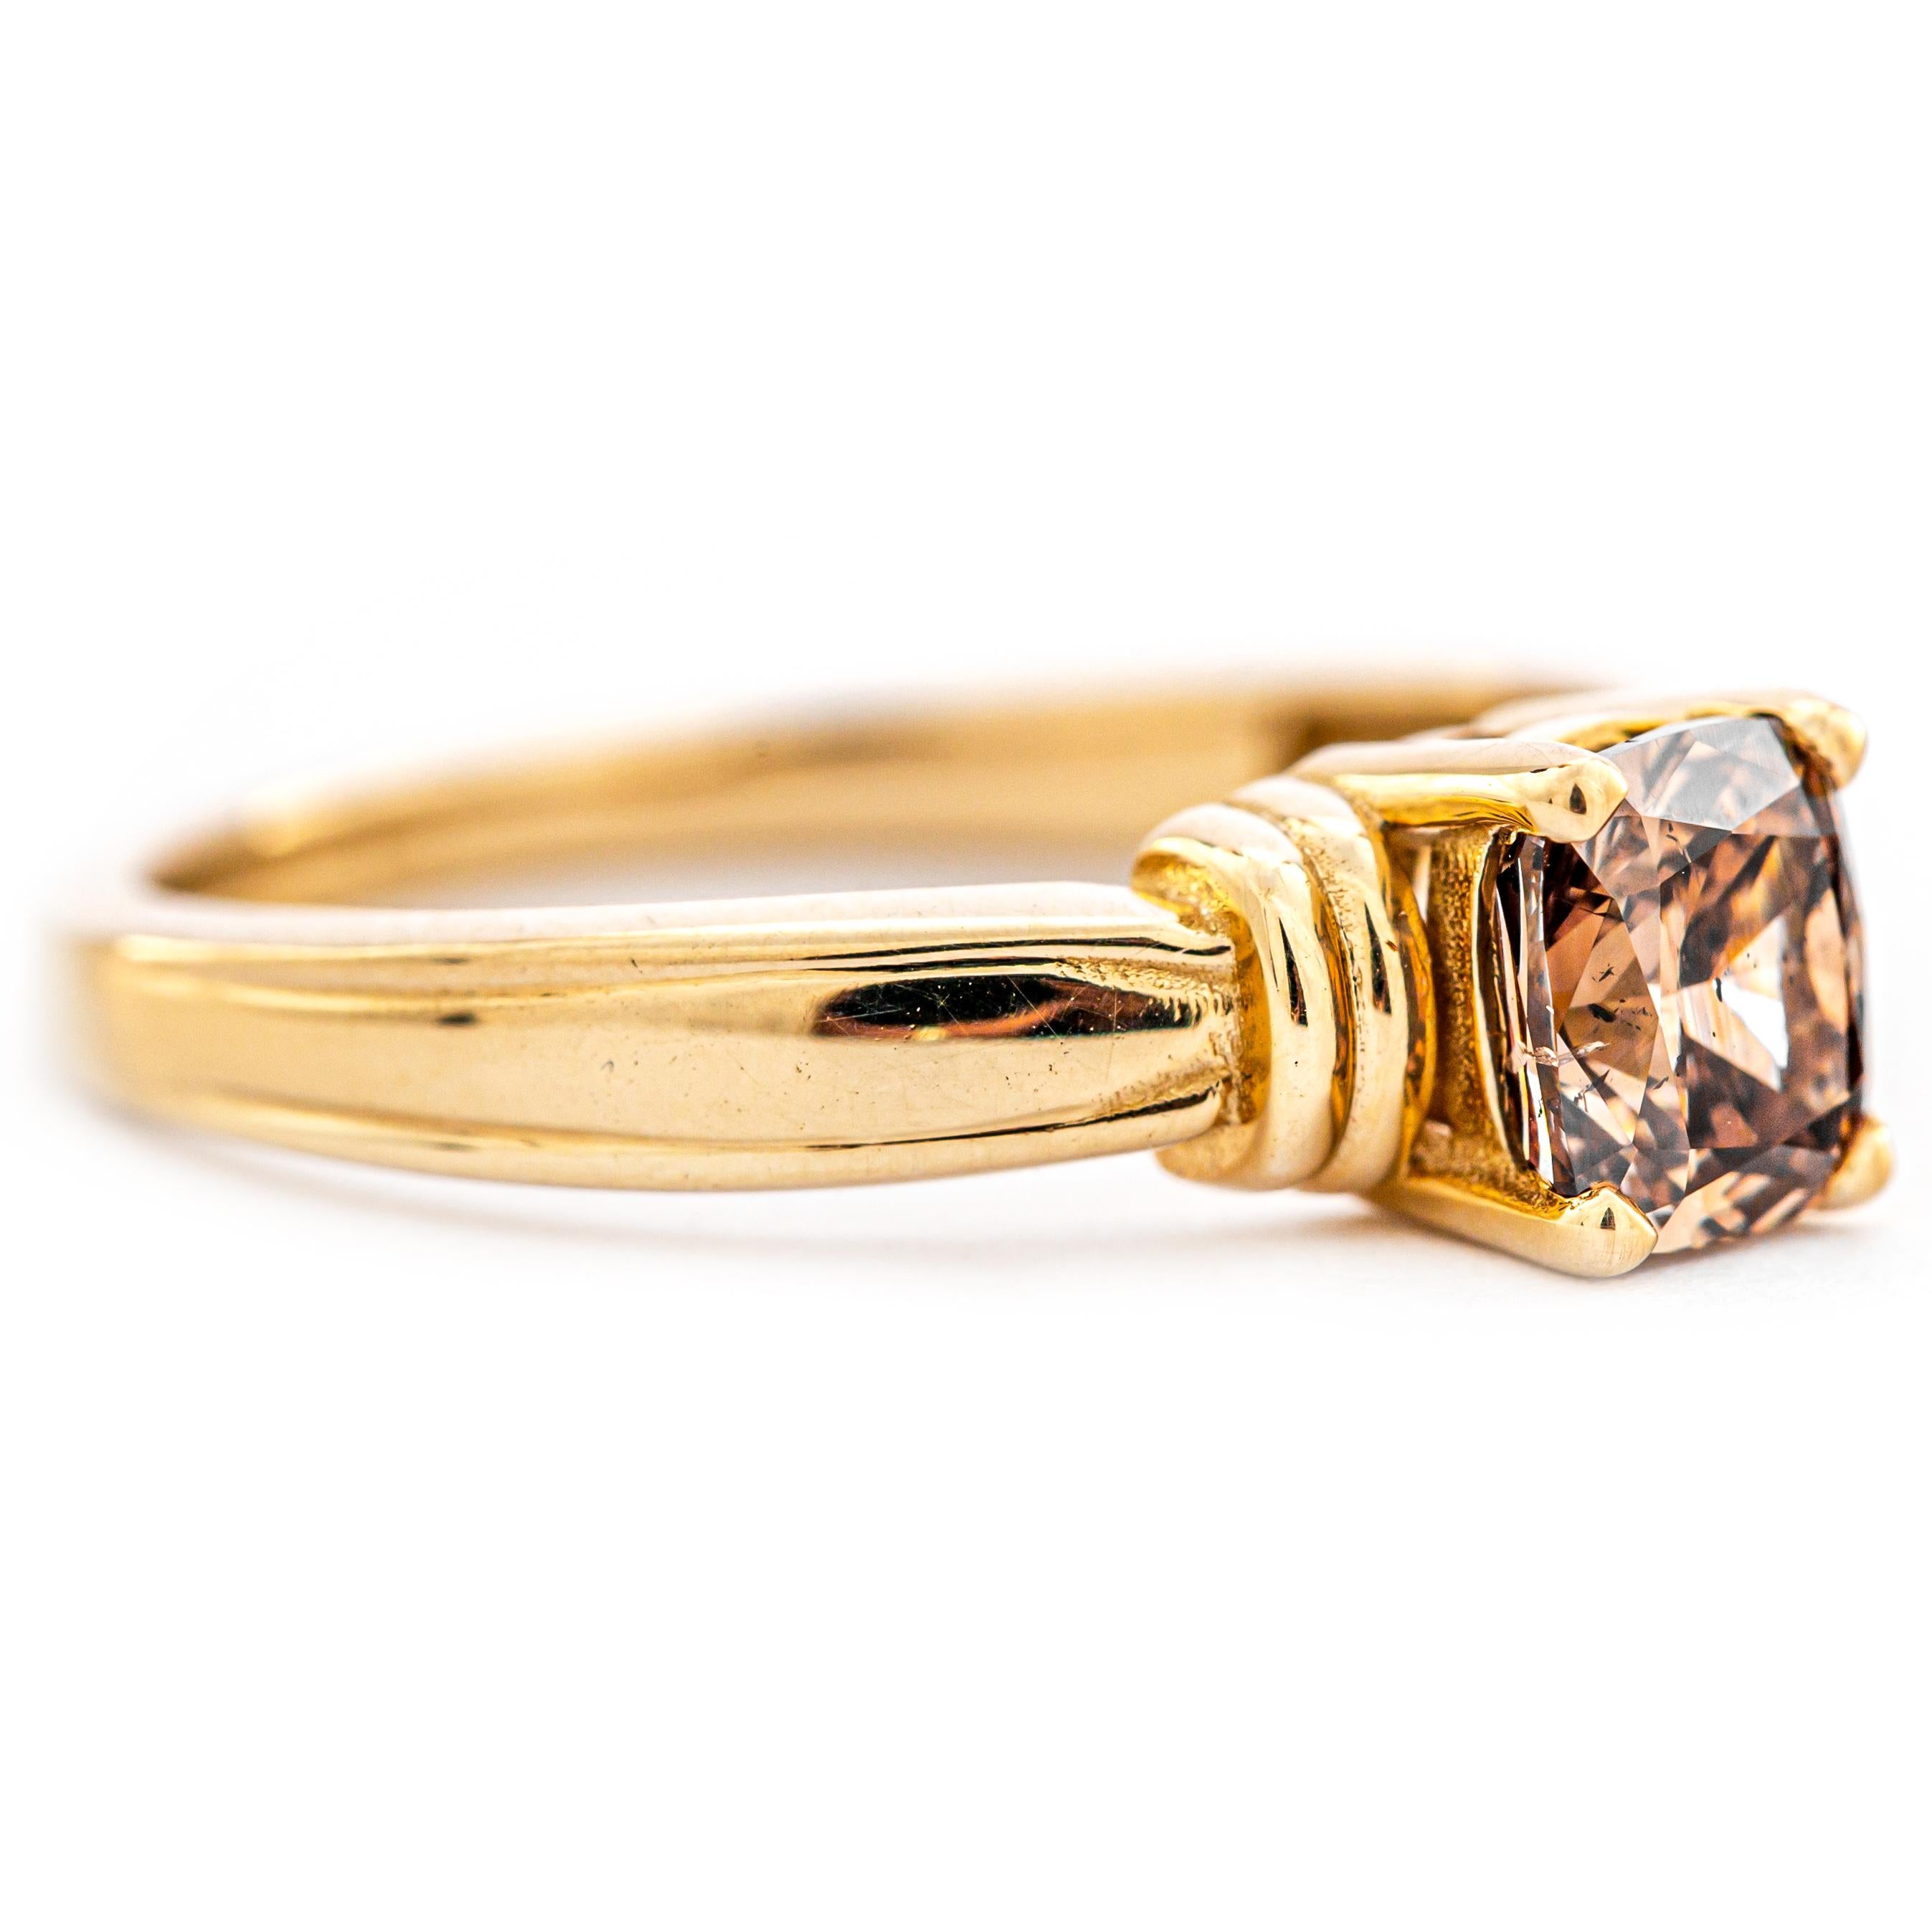 Women's 1.02ct Natural Fancy Deep Pinkish Brown Diamond Ring, No Reserve Price